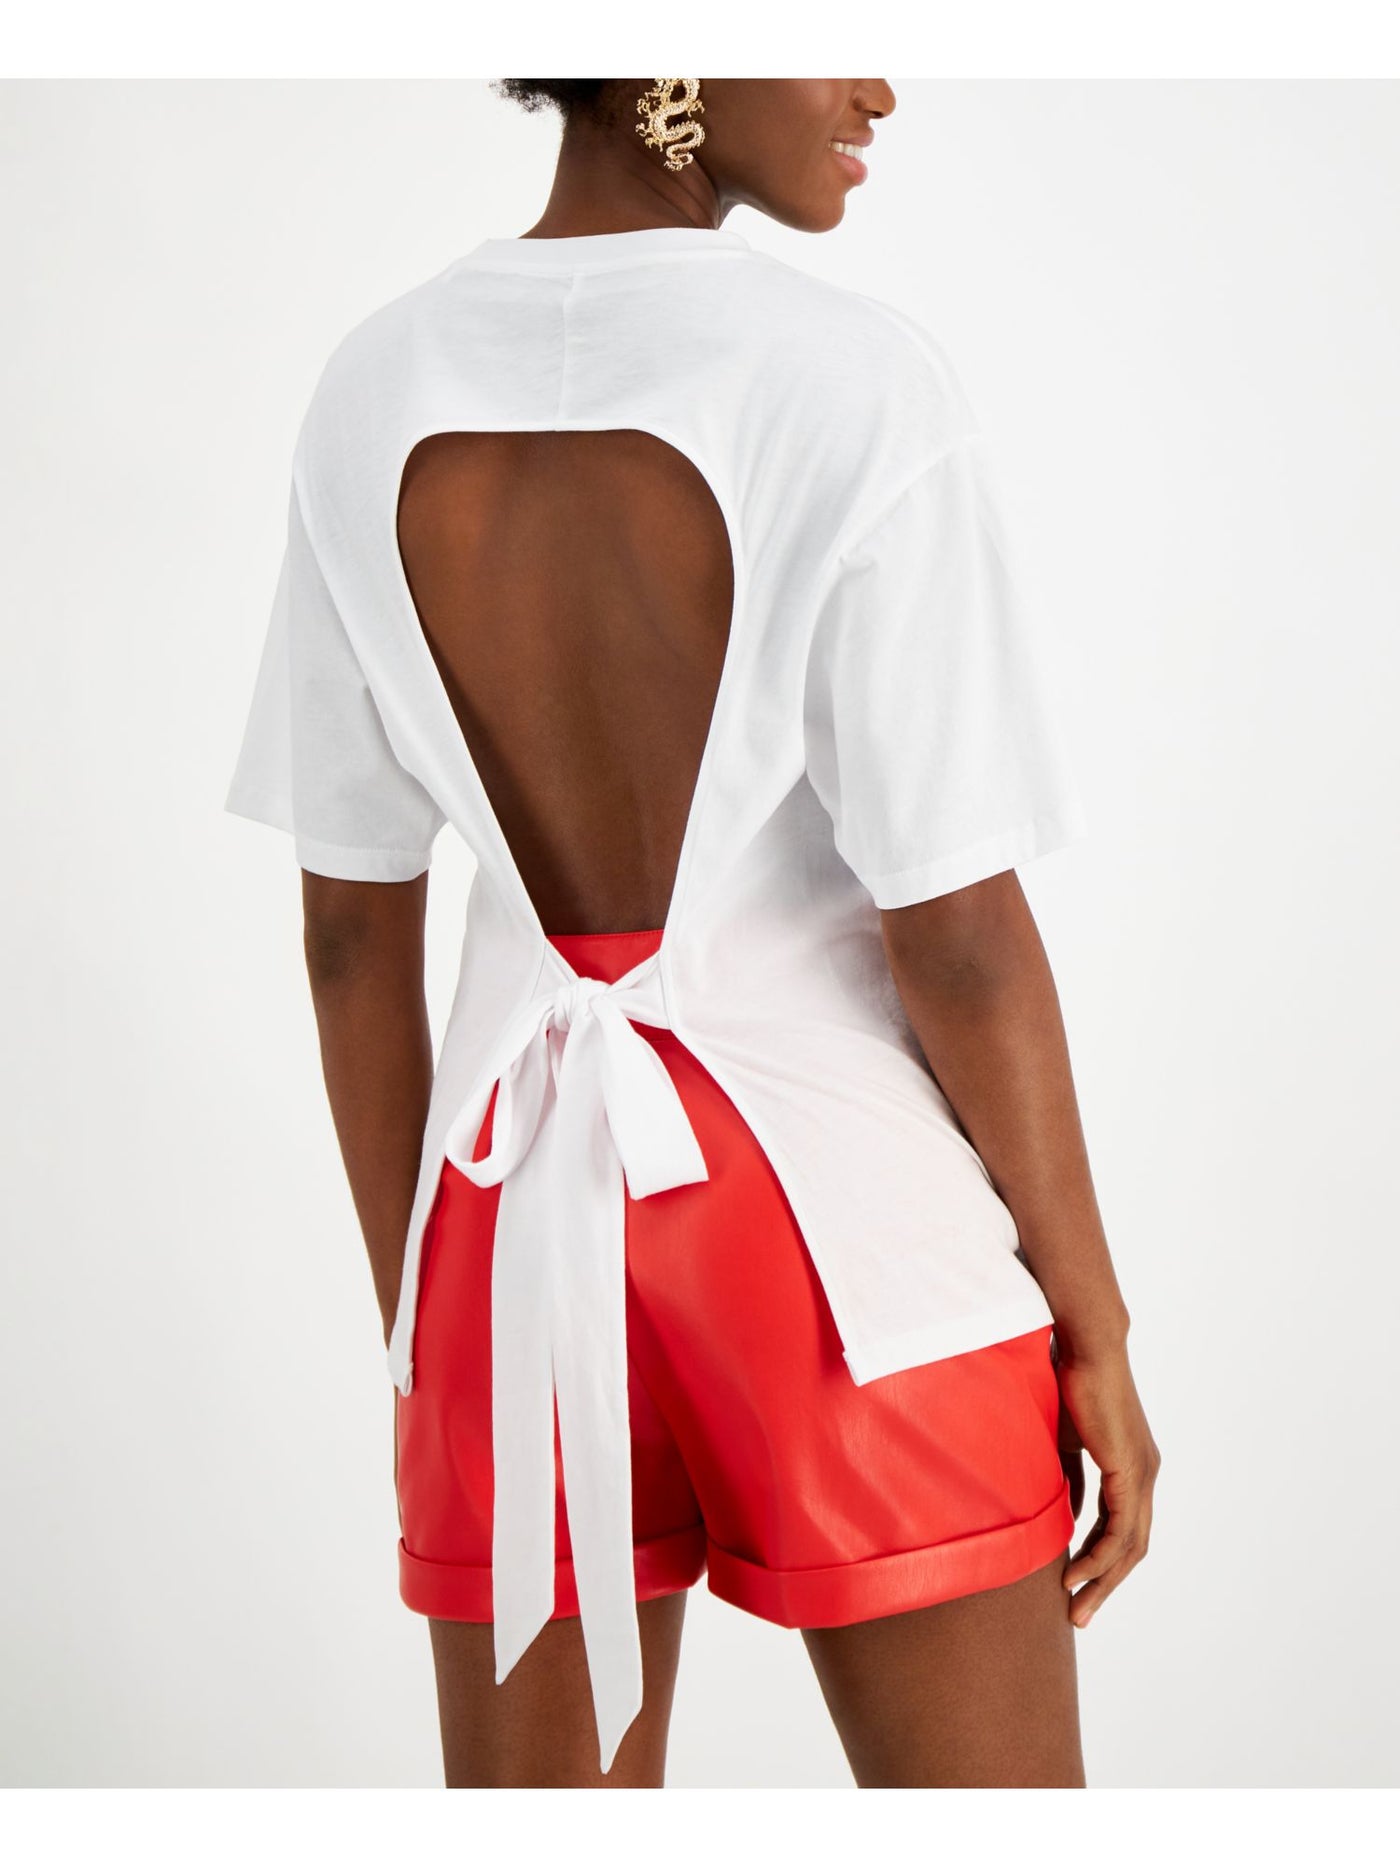 GUESS Womens White Cotton Short Sleeve Crew Neck T-Shirt XL